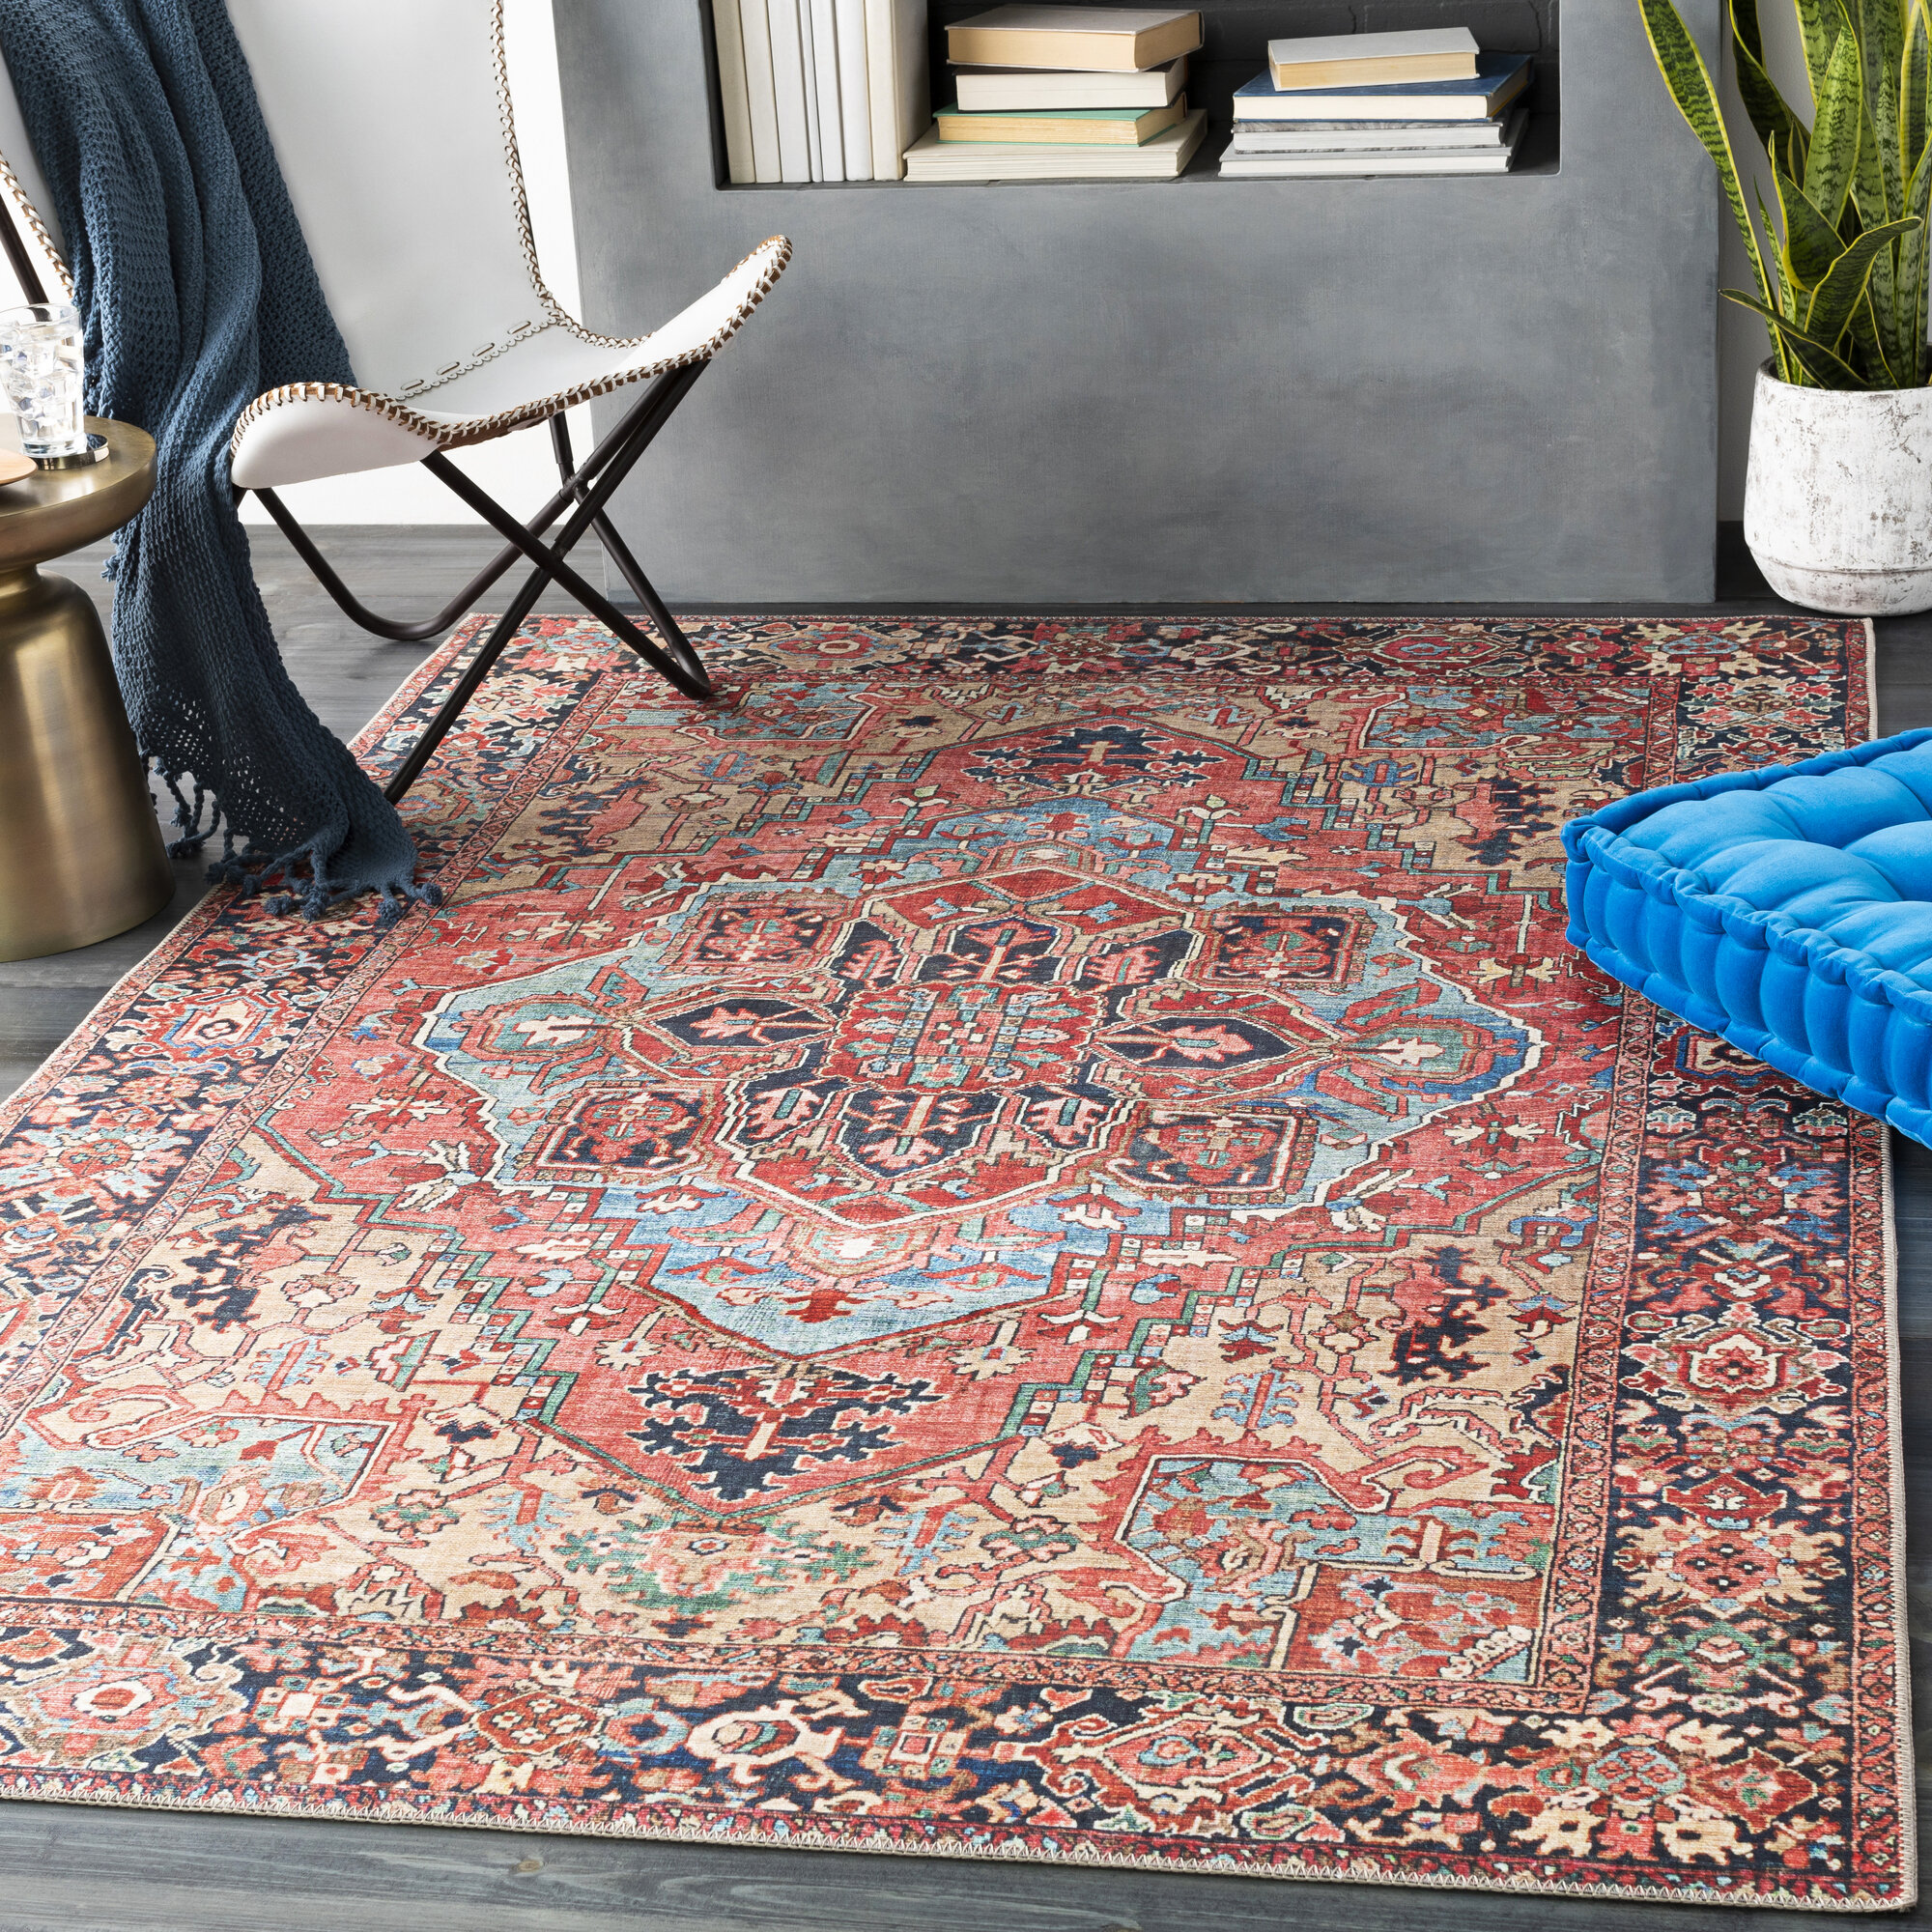 New Large Area Rugs Oriental Small Carpet Living Room Soft Runner Floor Mats